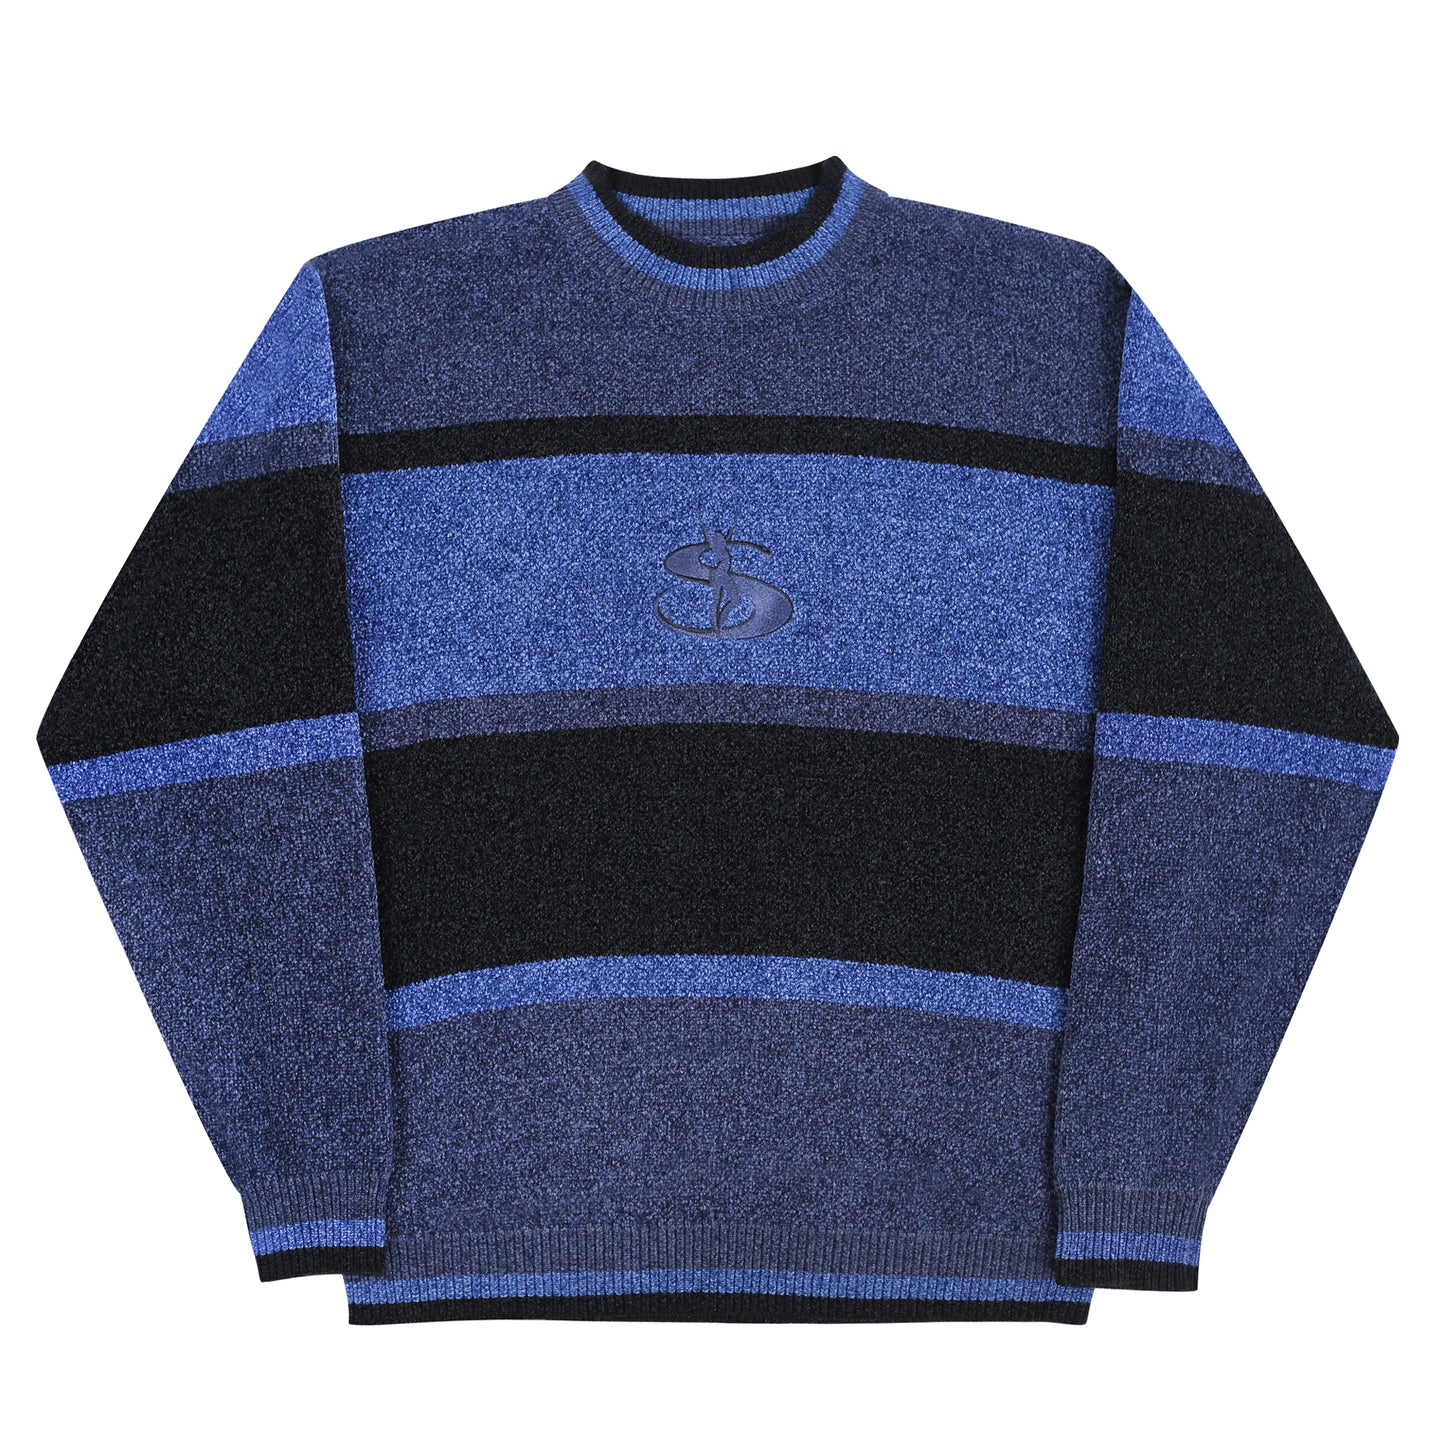 Phantasy Chenille Sweater (Black/Midnight)